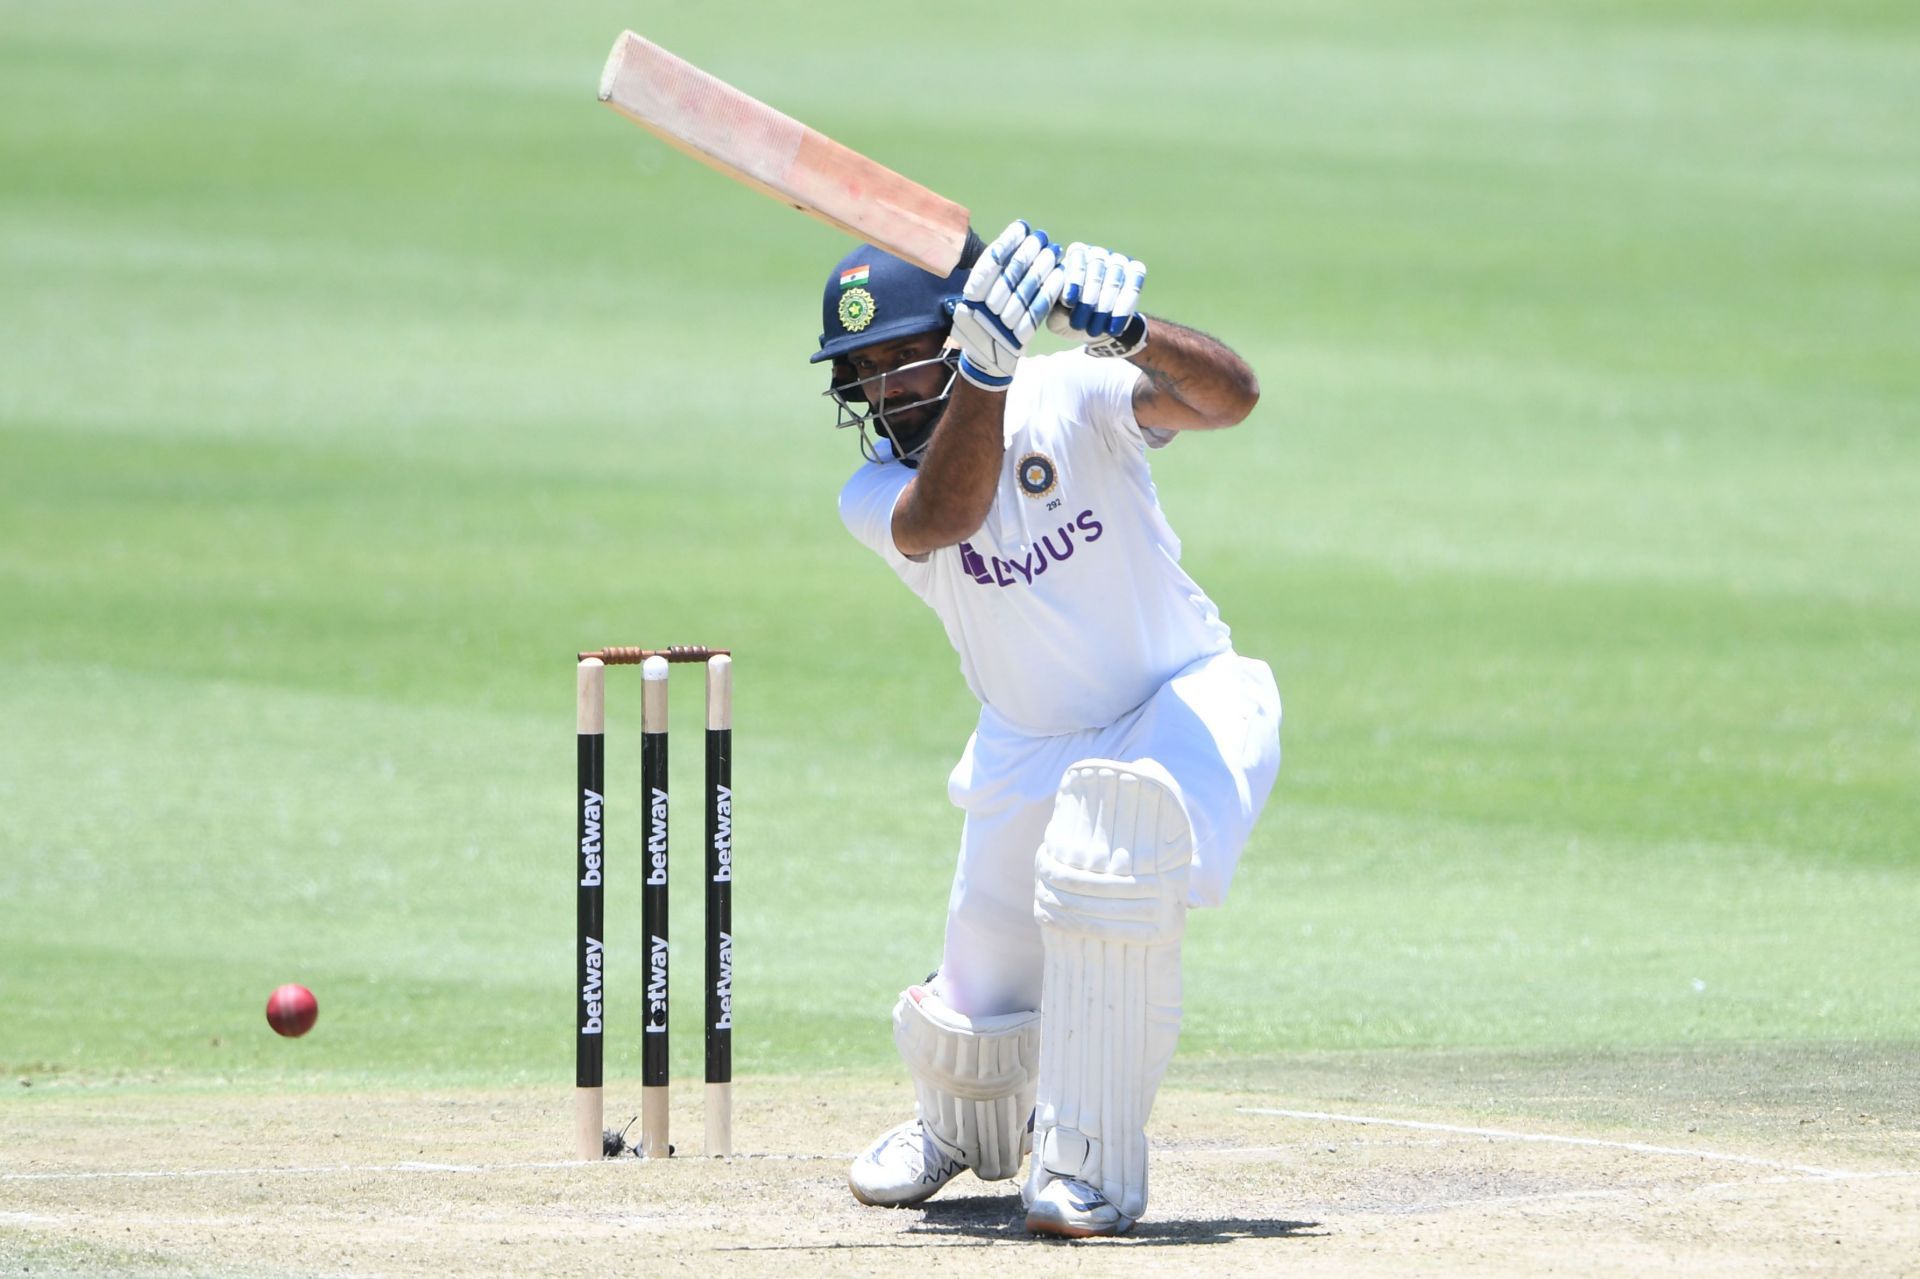 Hanuma Vihari gave a decent account of himself in the Johannesburg Test